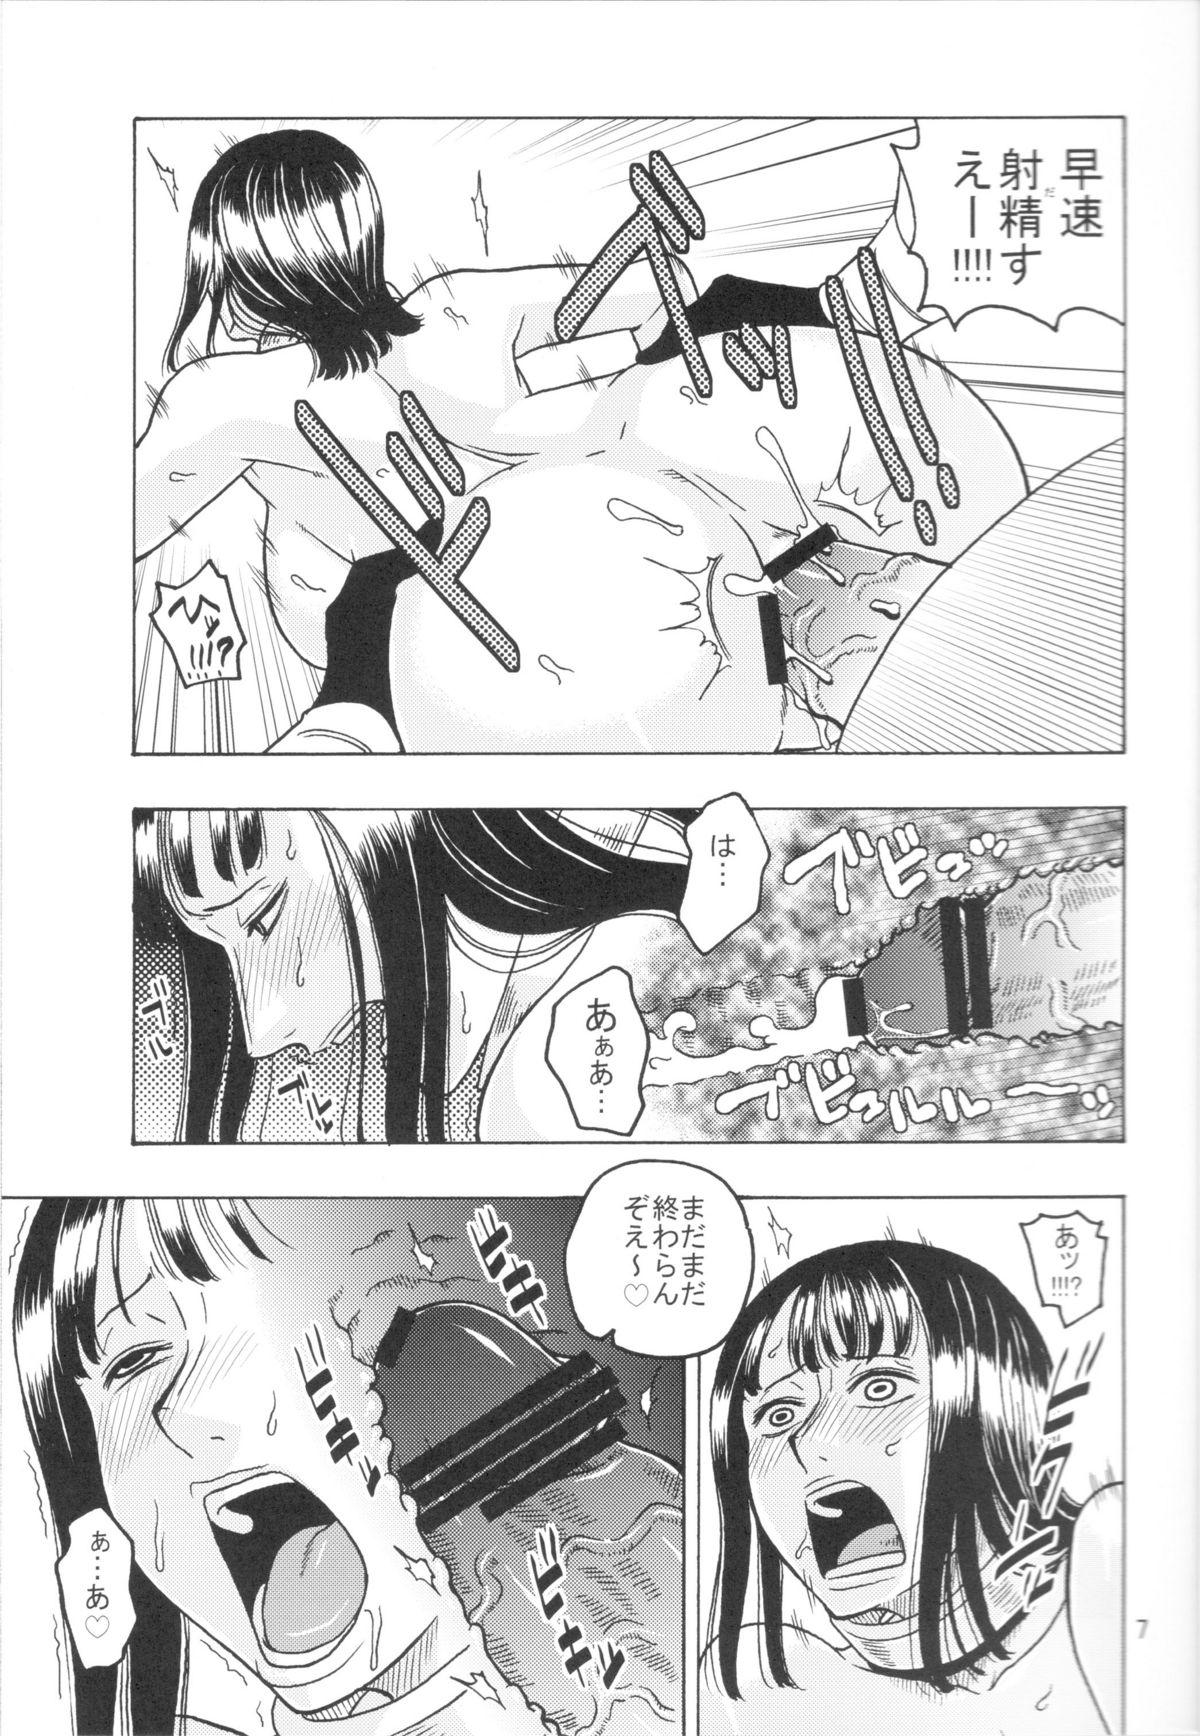 Vecina Nami no Koukai Nisshi EX NamiRobi 3 - One piece First - Page 8